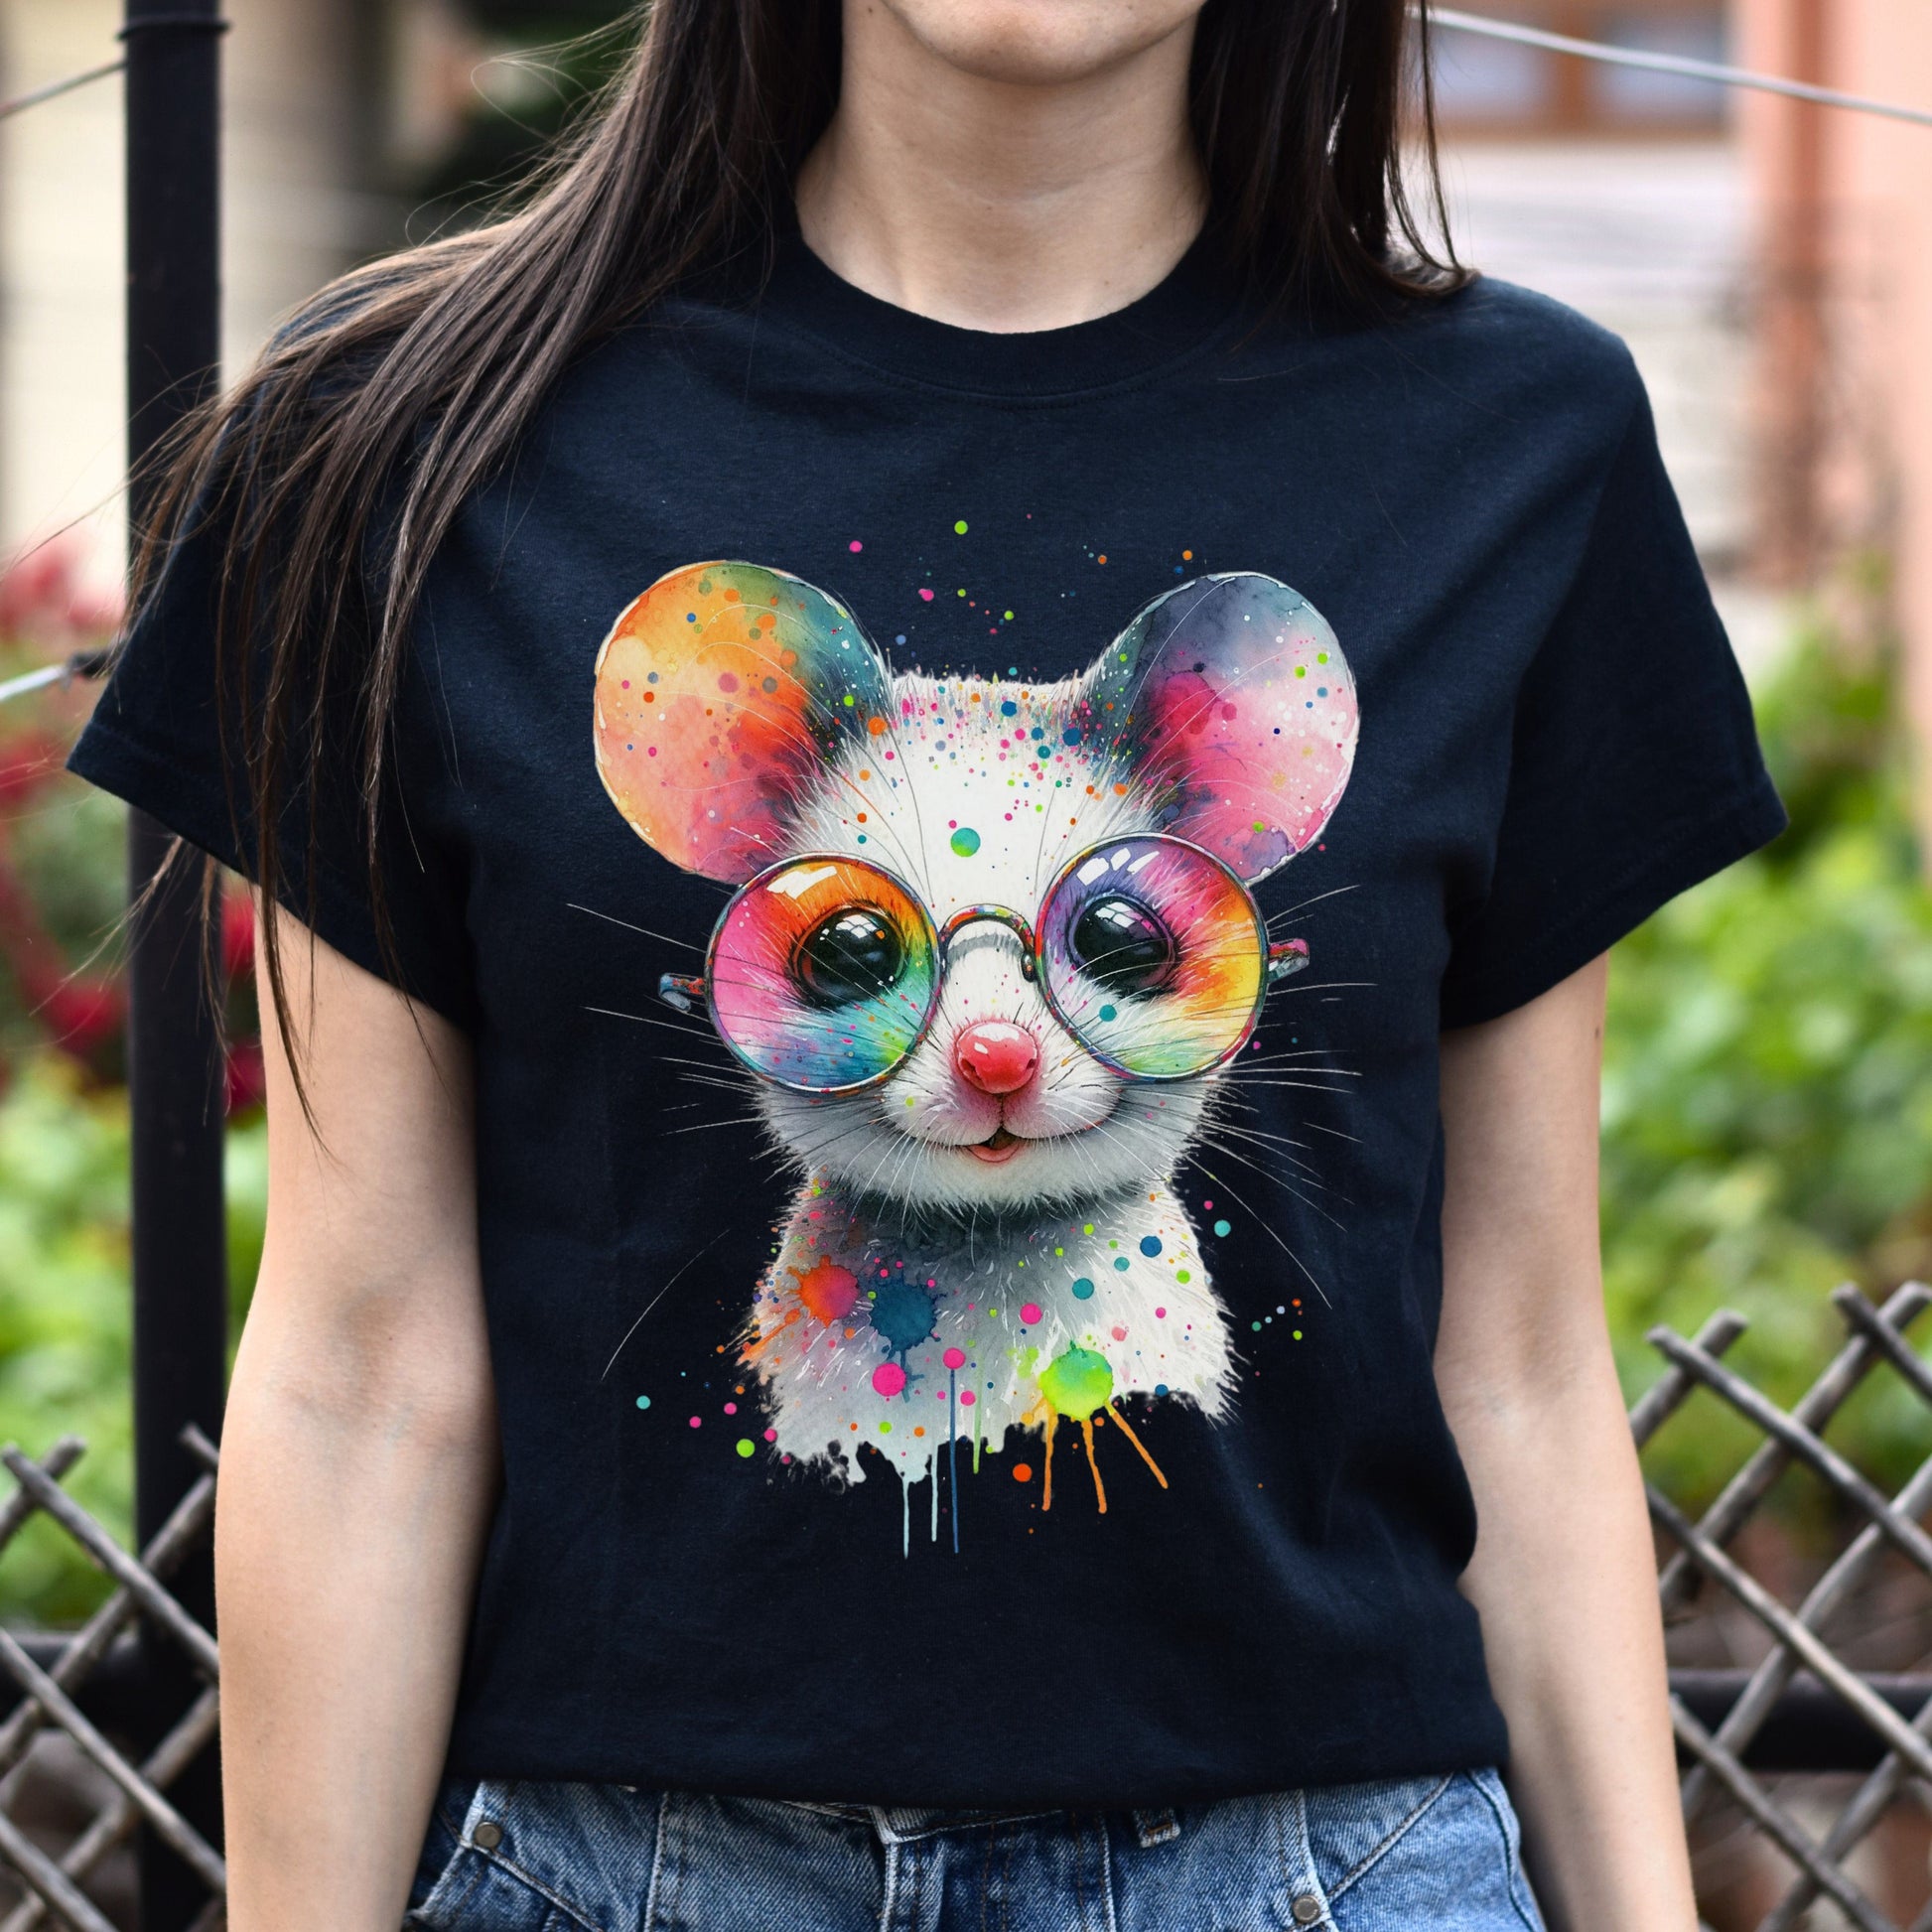 Whimsical mouse with glasses Color Splash Unisex T-shirt Black Navy Dark Heather-Family-Gift-Planet